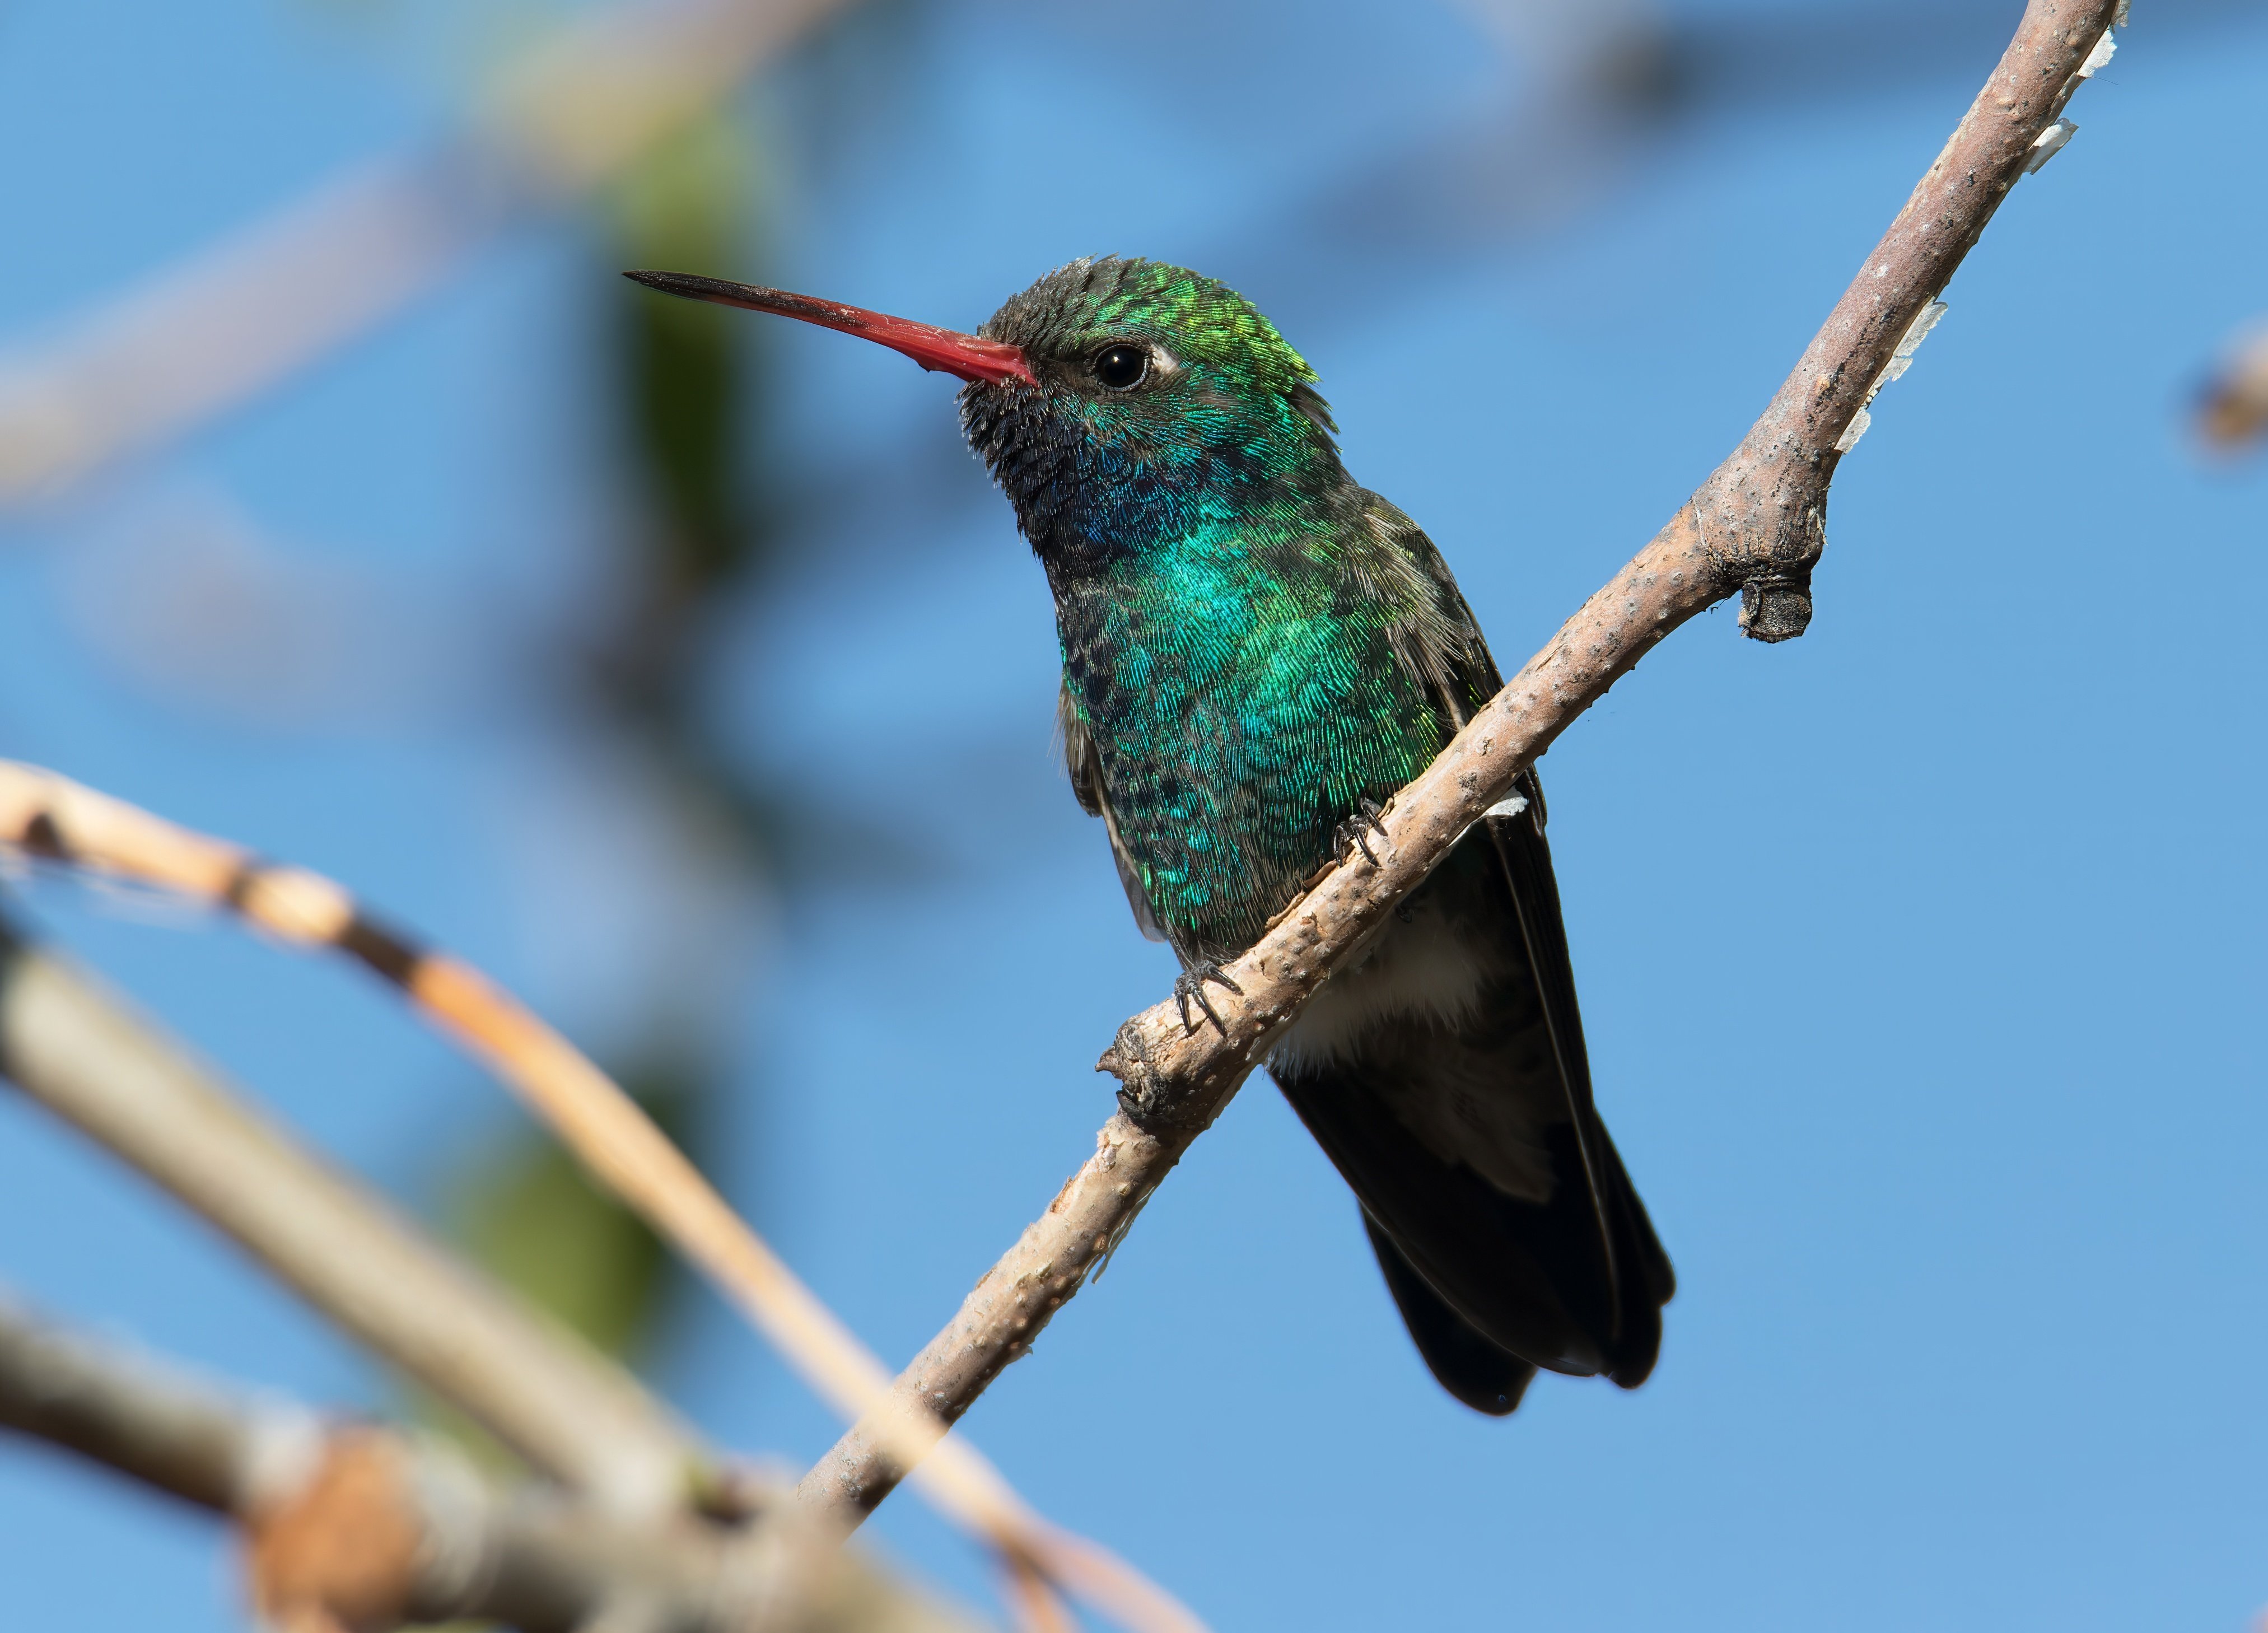 Broad-billed Hummingbird © Chris Charlesworth 52879764615_77c5b9dbba_o-topaz-denoise